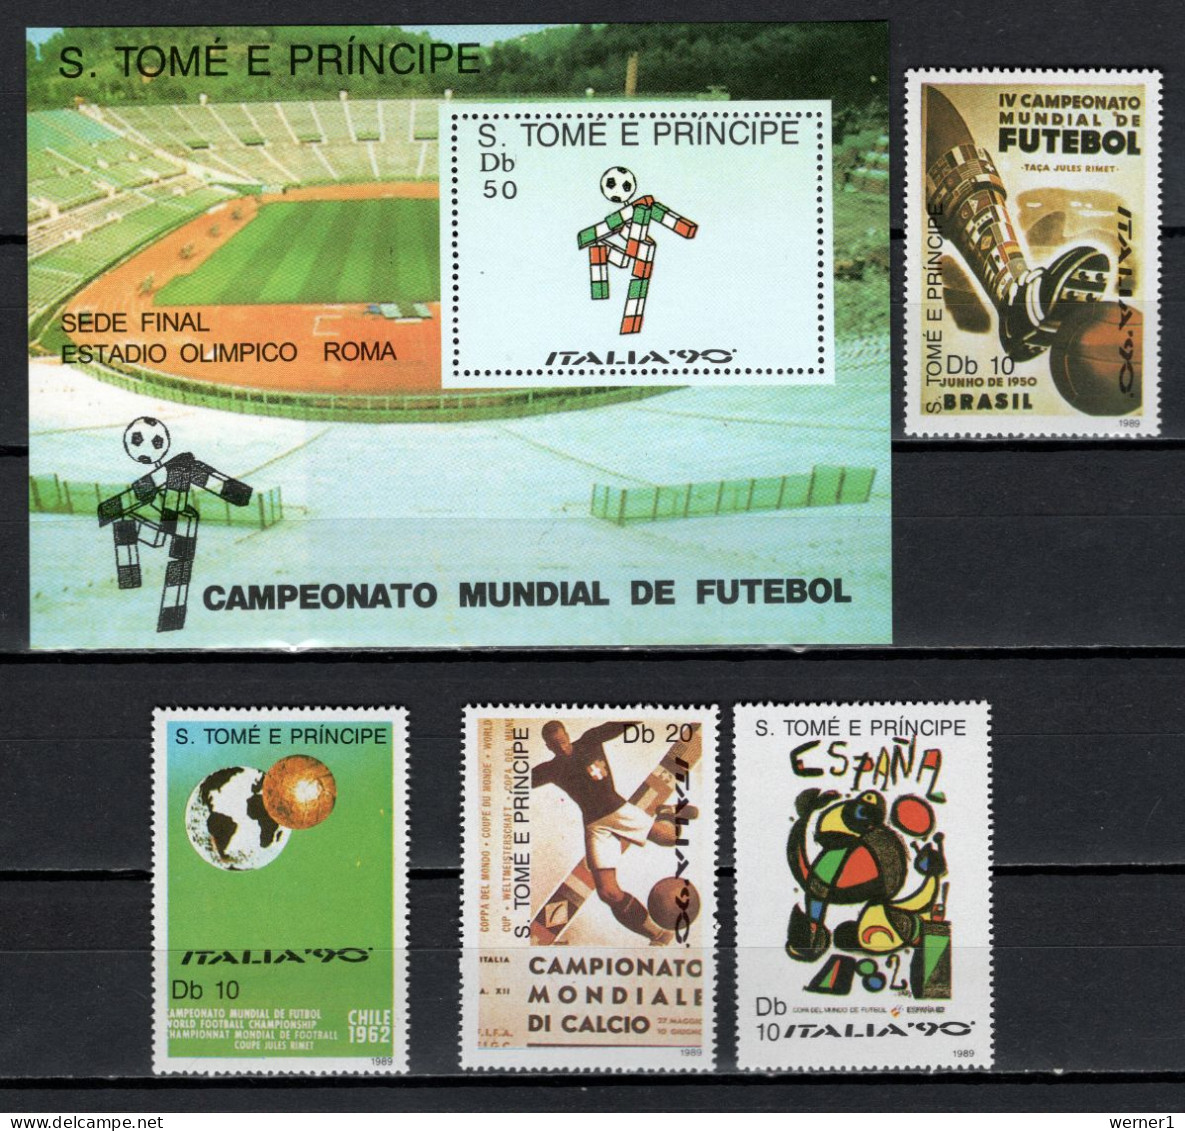 Sao Tome E Principe (St. Thomas & Prince) 1989 Football Soccer World Cup Set Of 4 + S/s MNH - 1990 – Italia